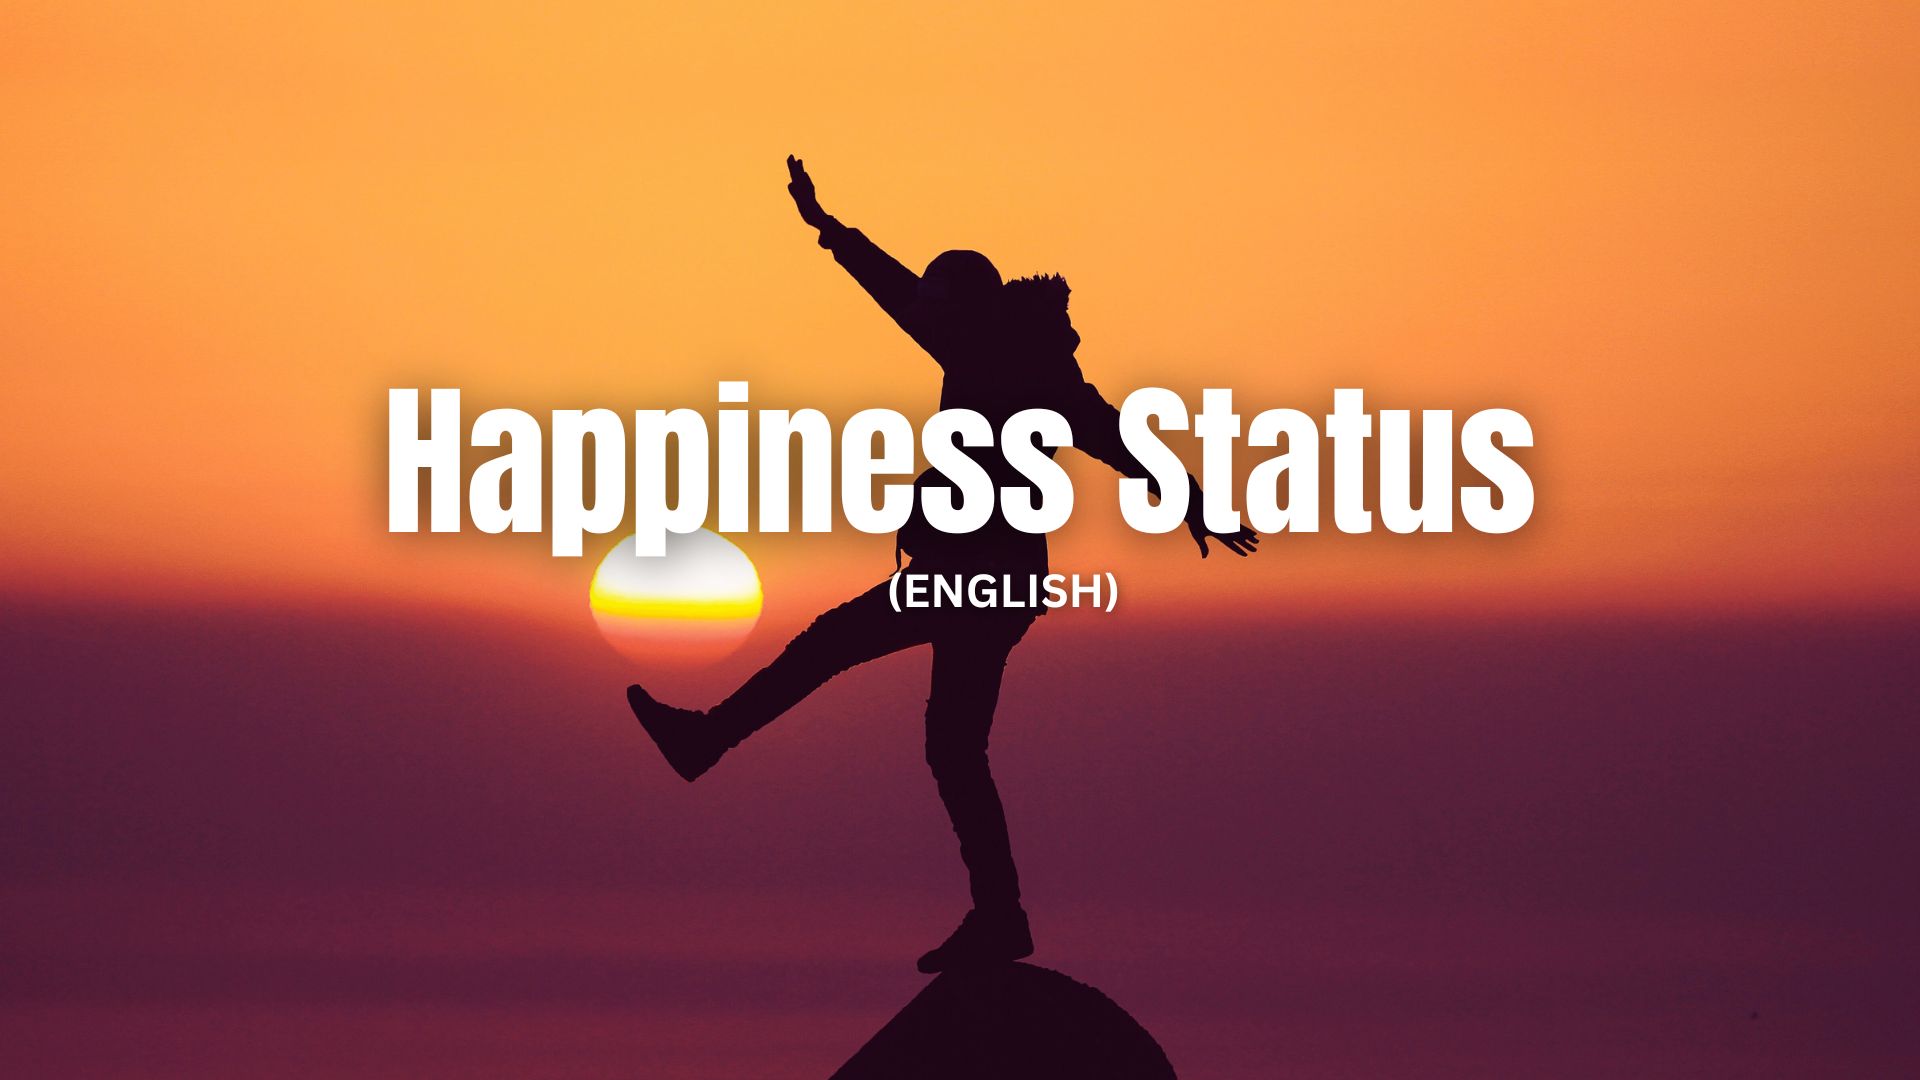 Happiness Status in English